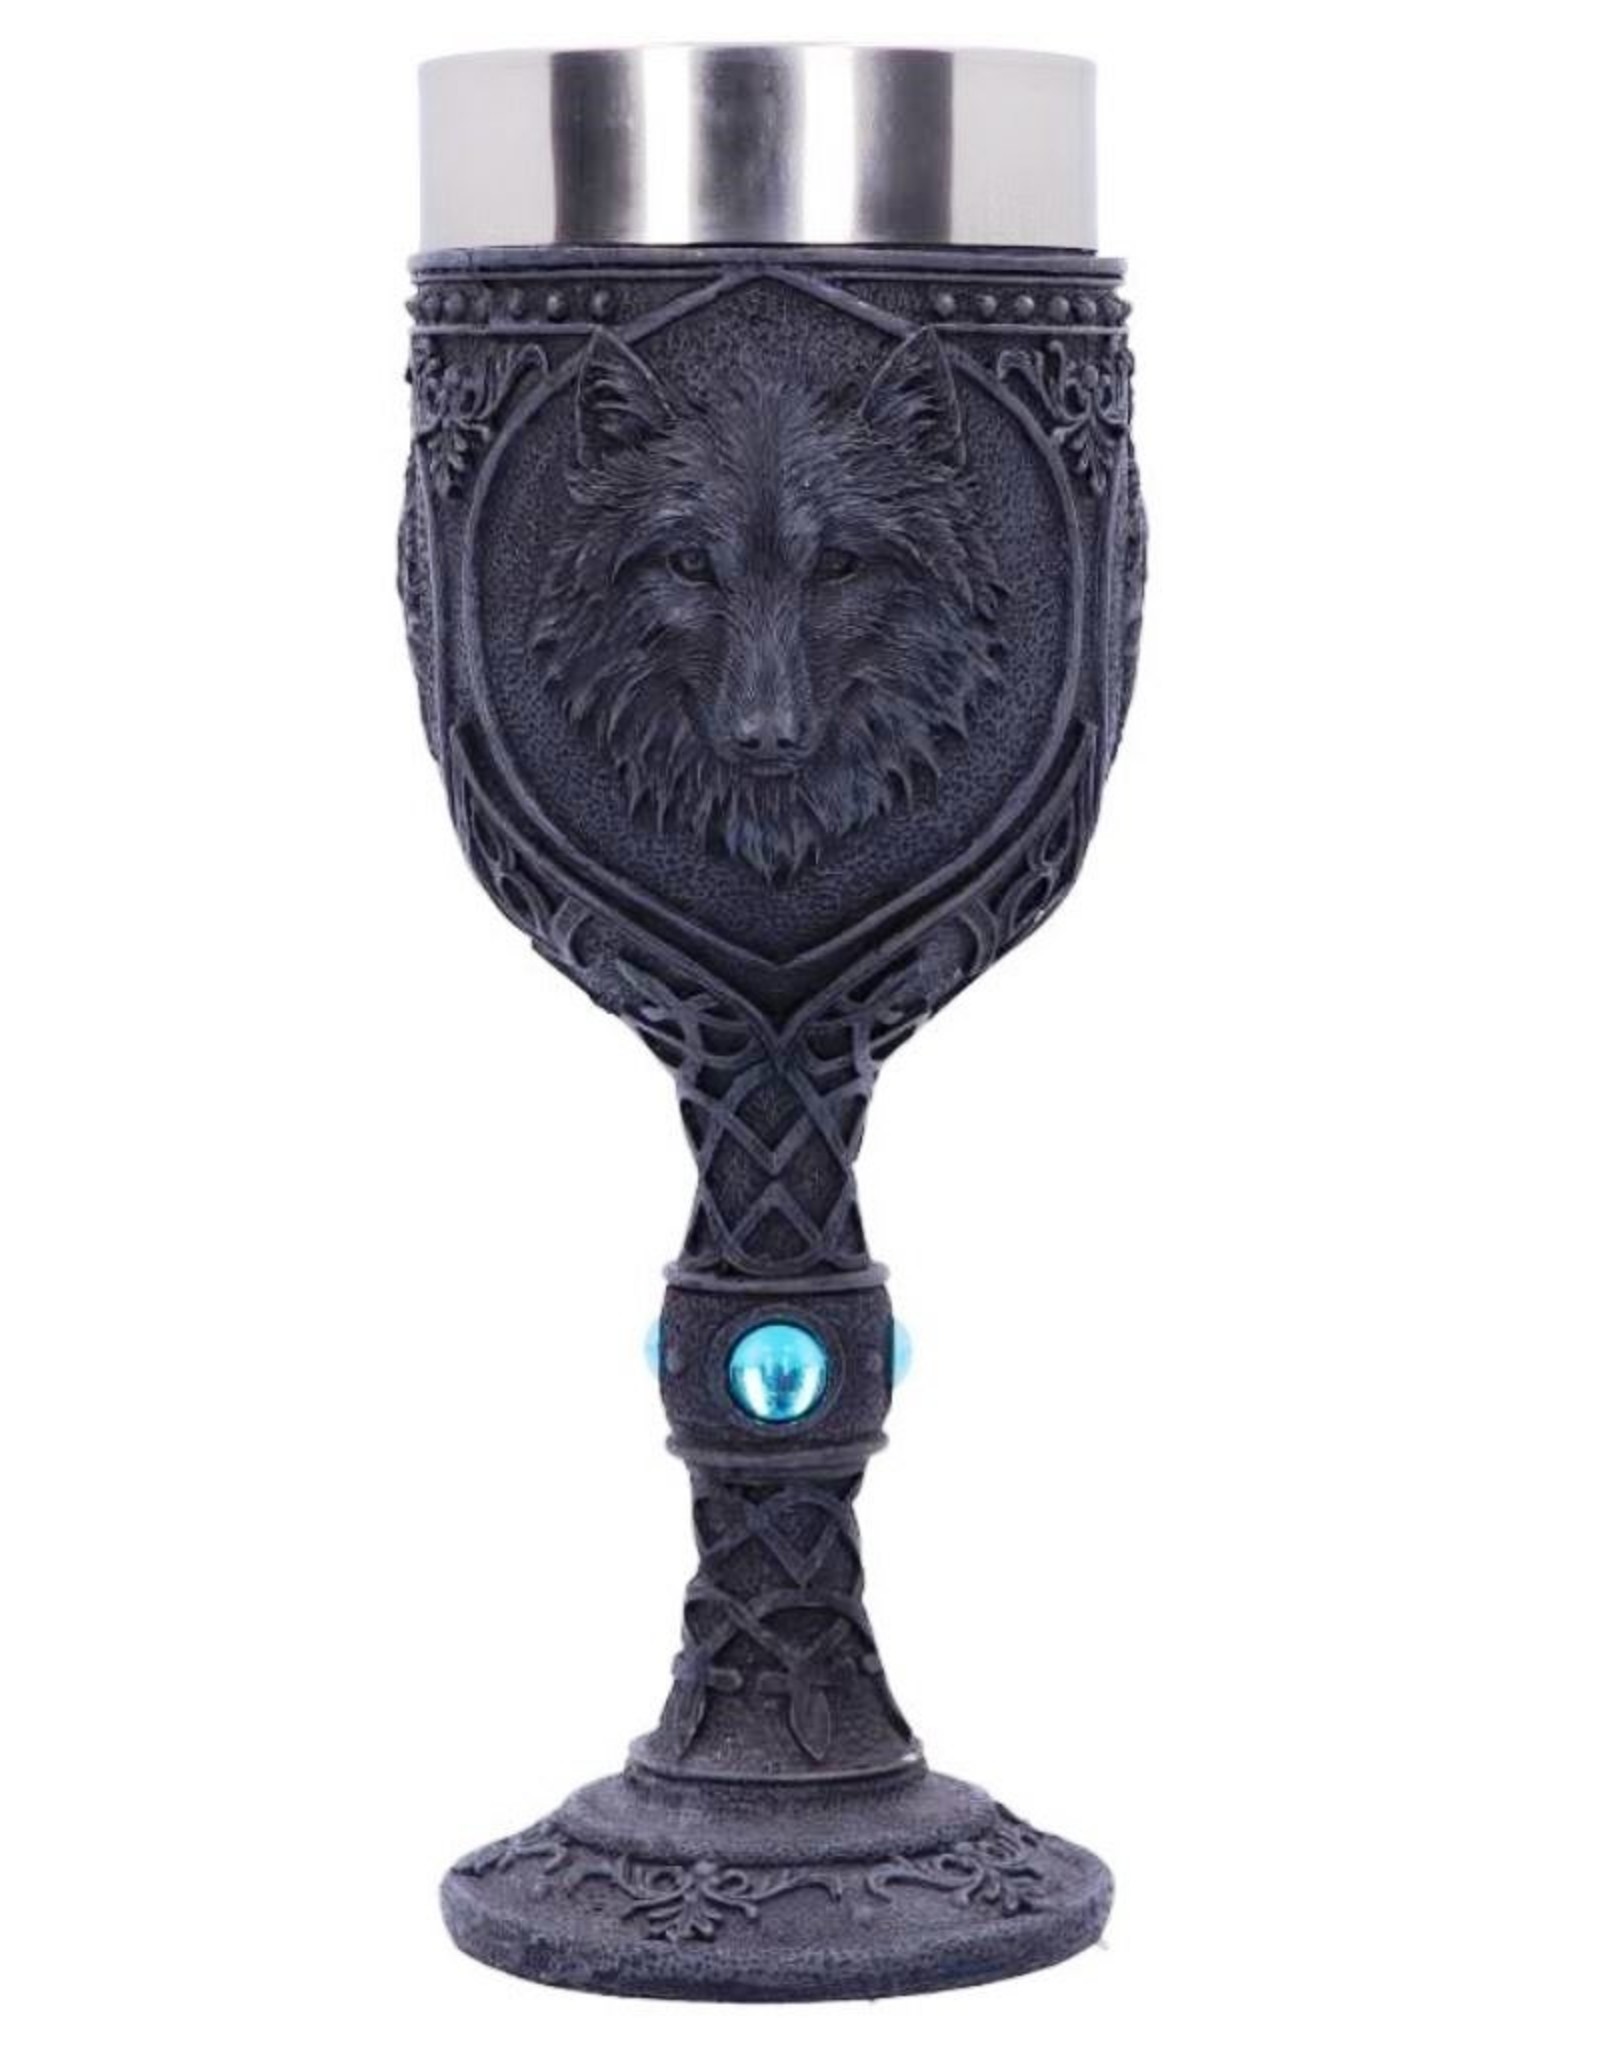 Alator Giftware & Lifestyle - Night Wolf Black Gothic Goblet 19.5cm